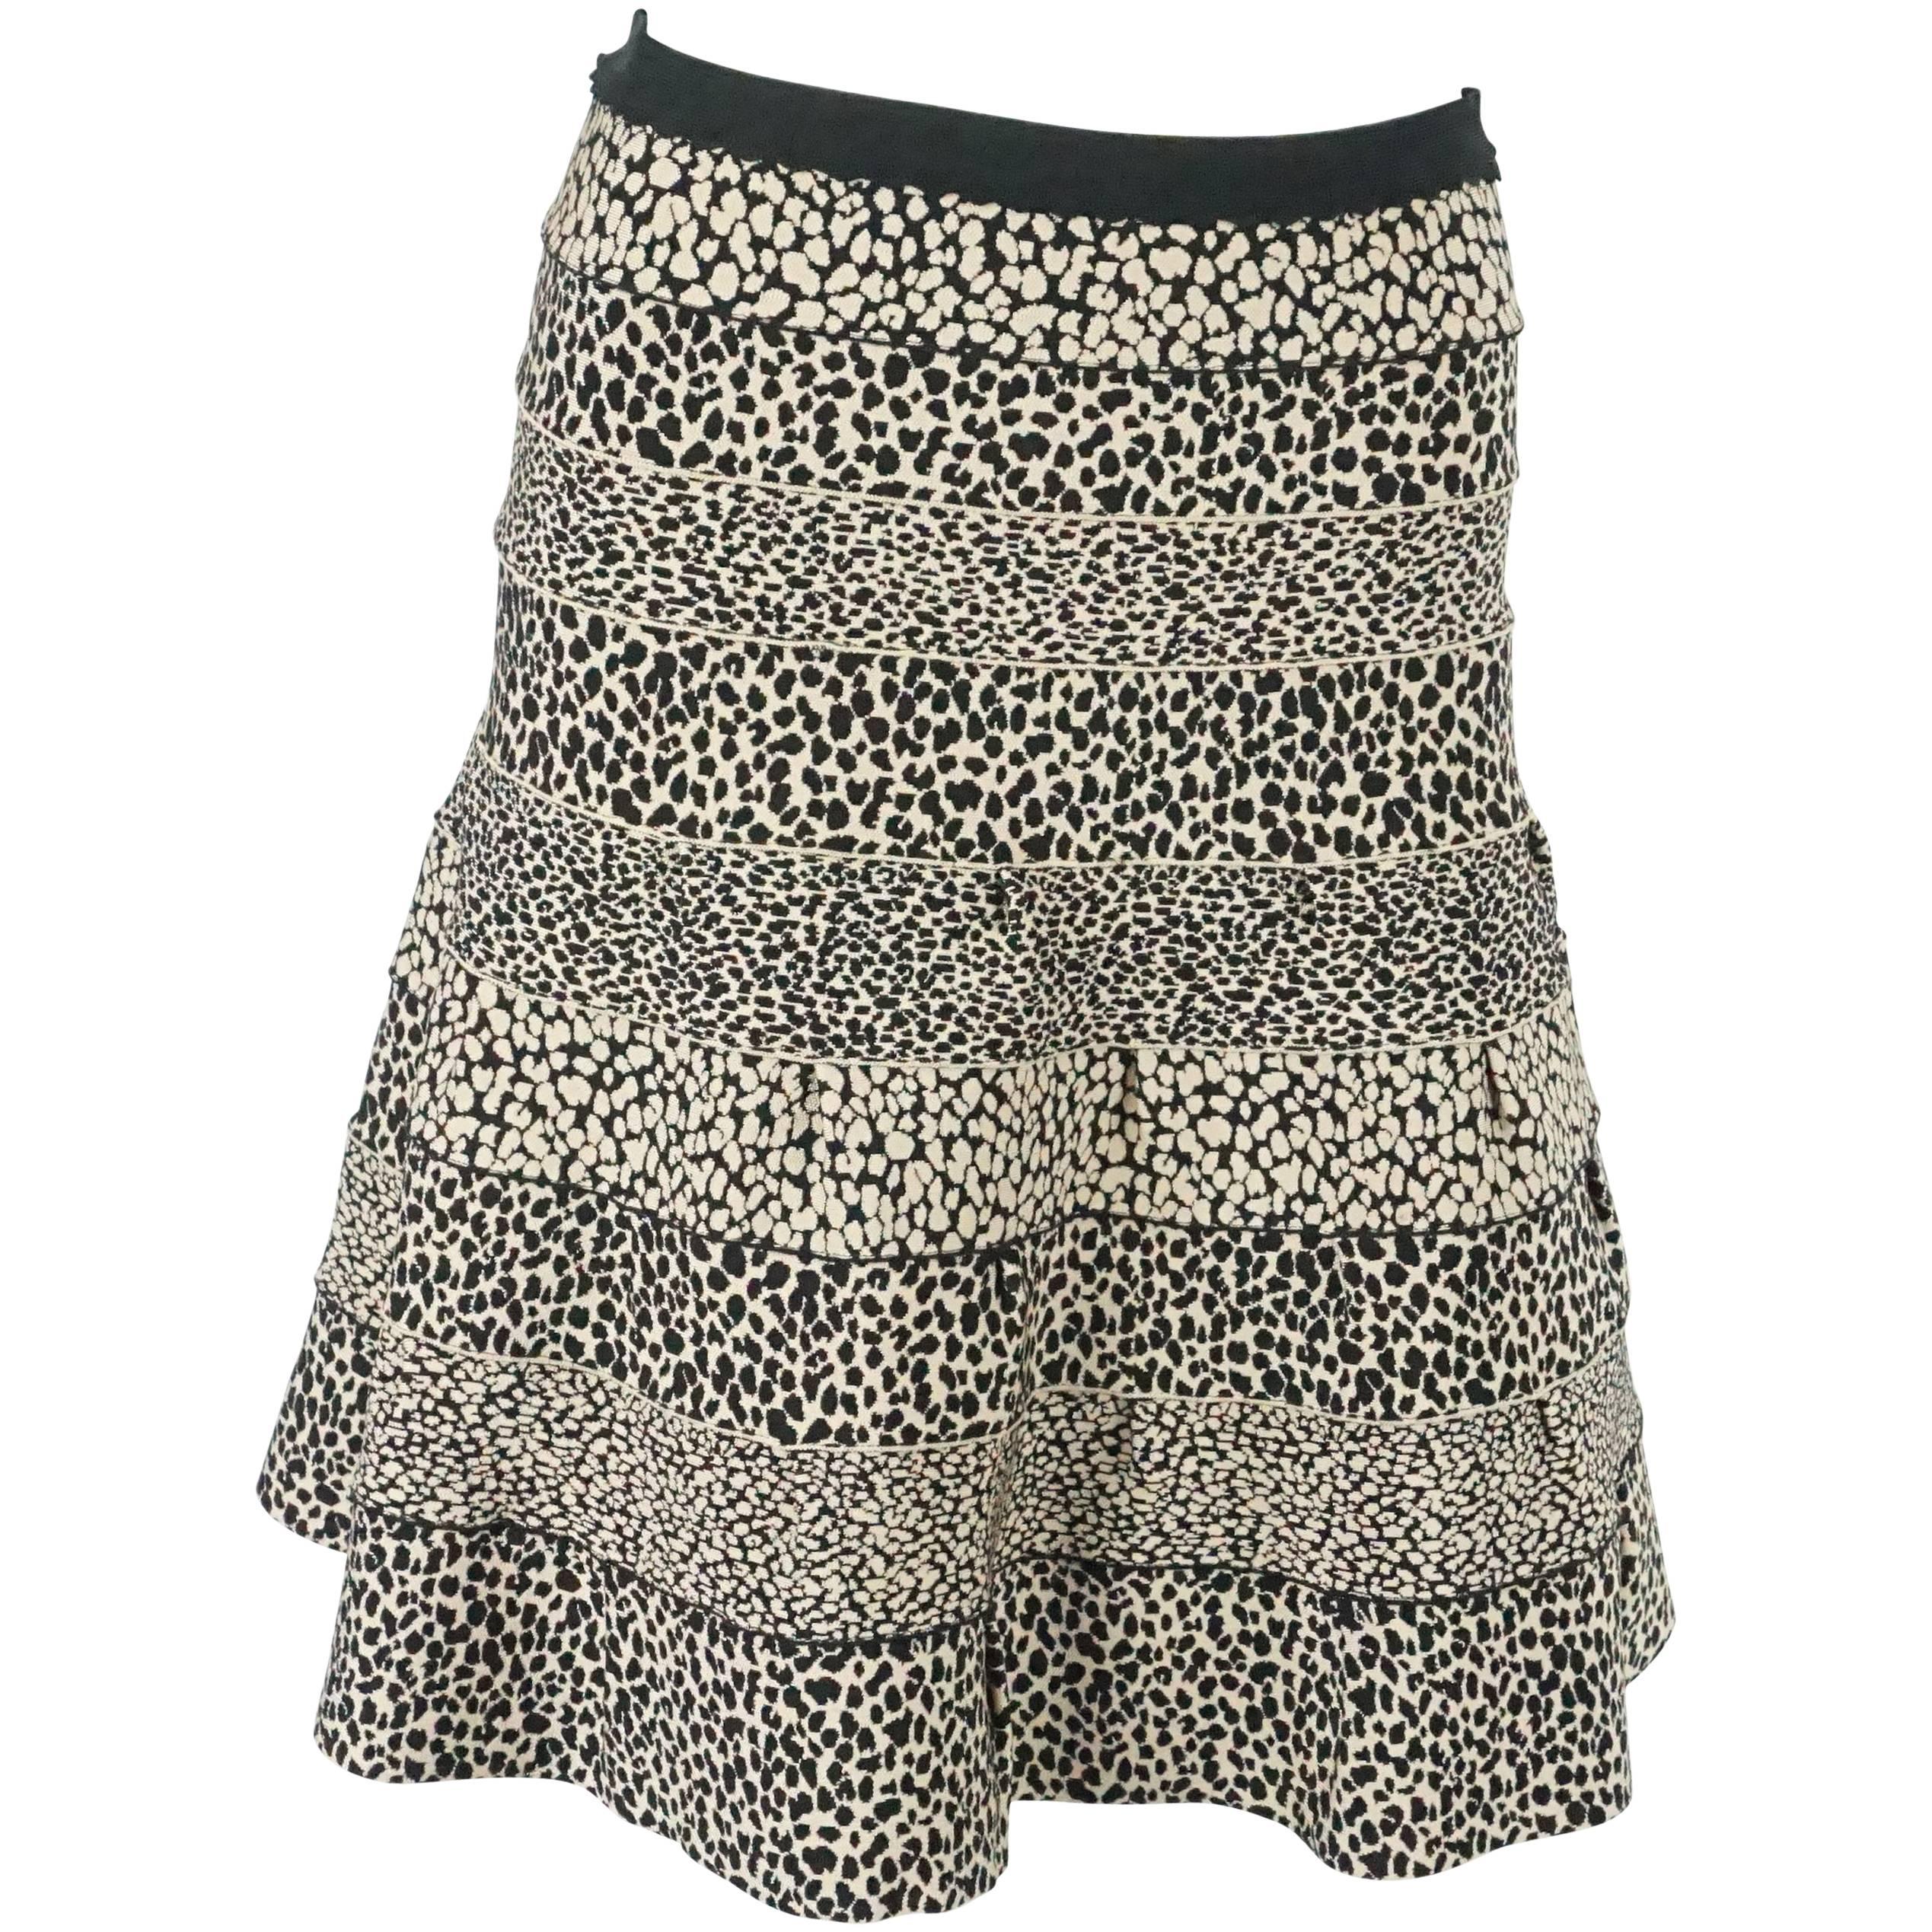 Herve Leger Black and Tan A-Line Bandage Animal Print Knit Skirt - M